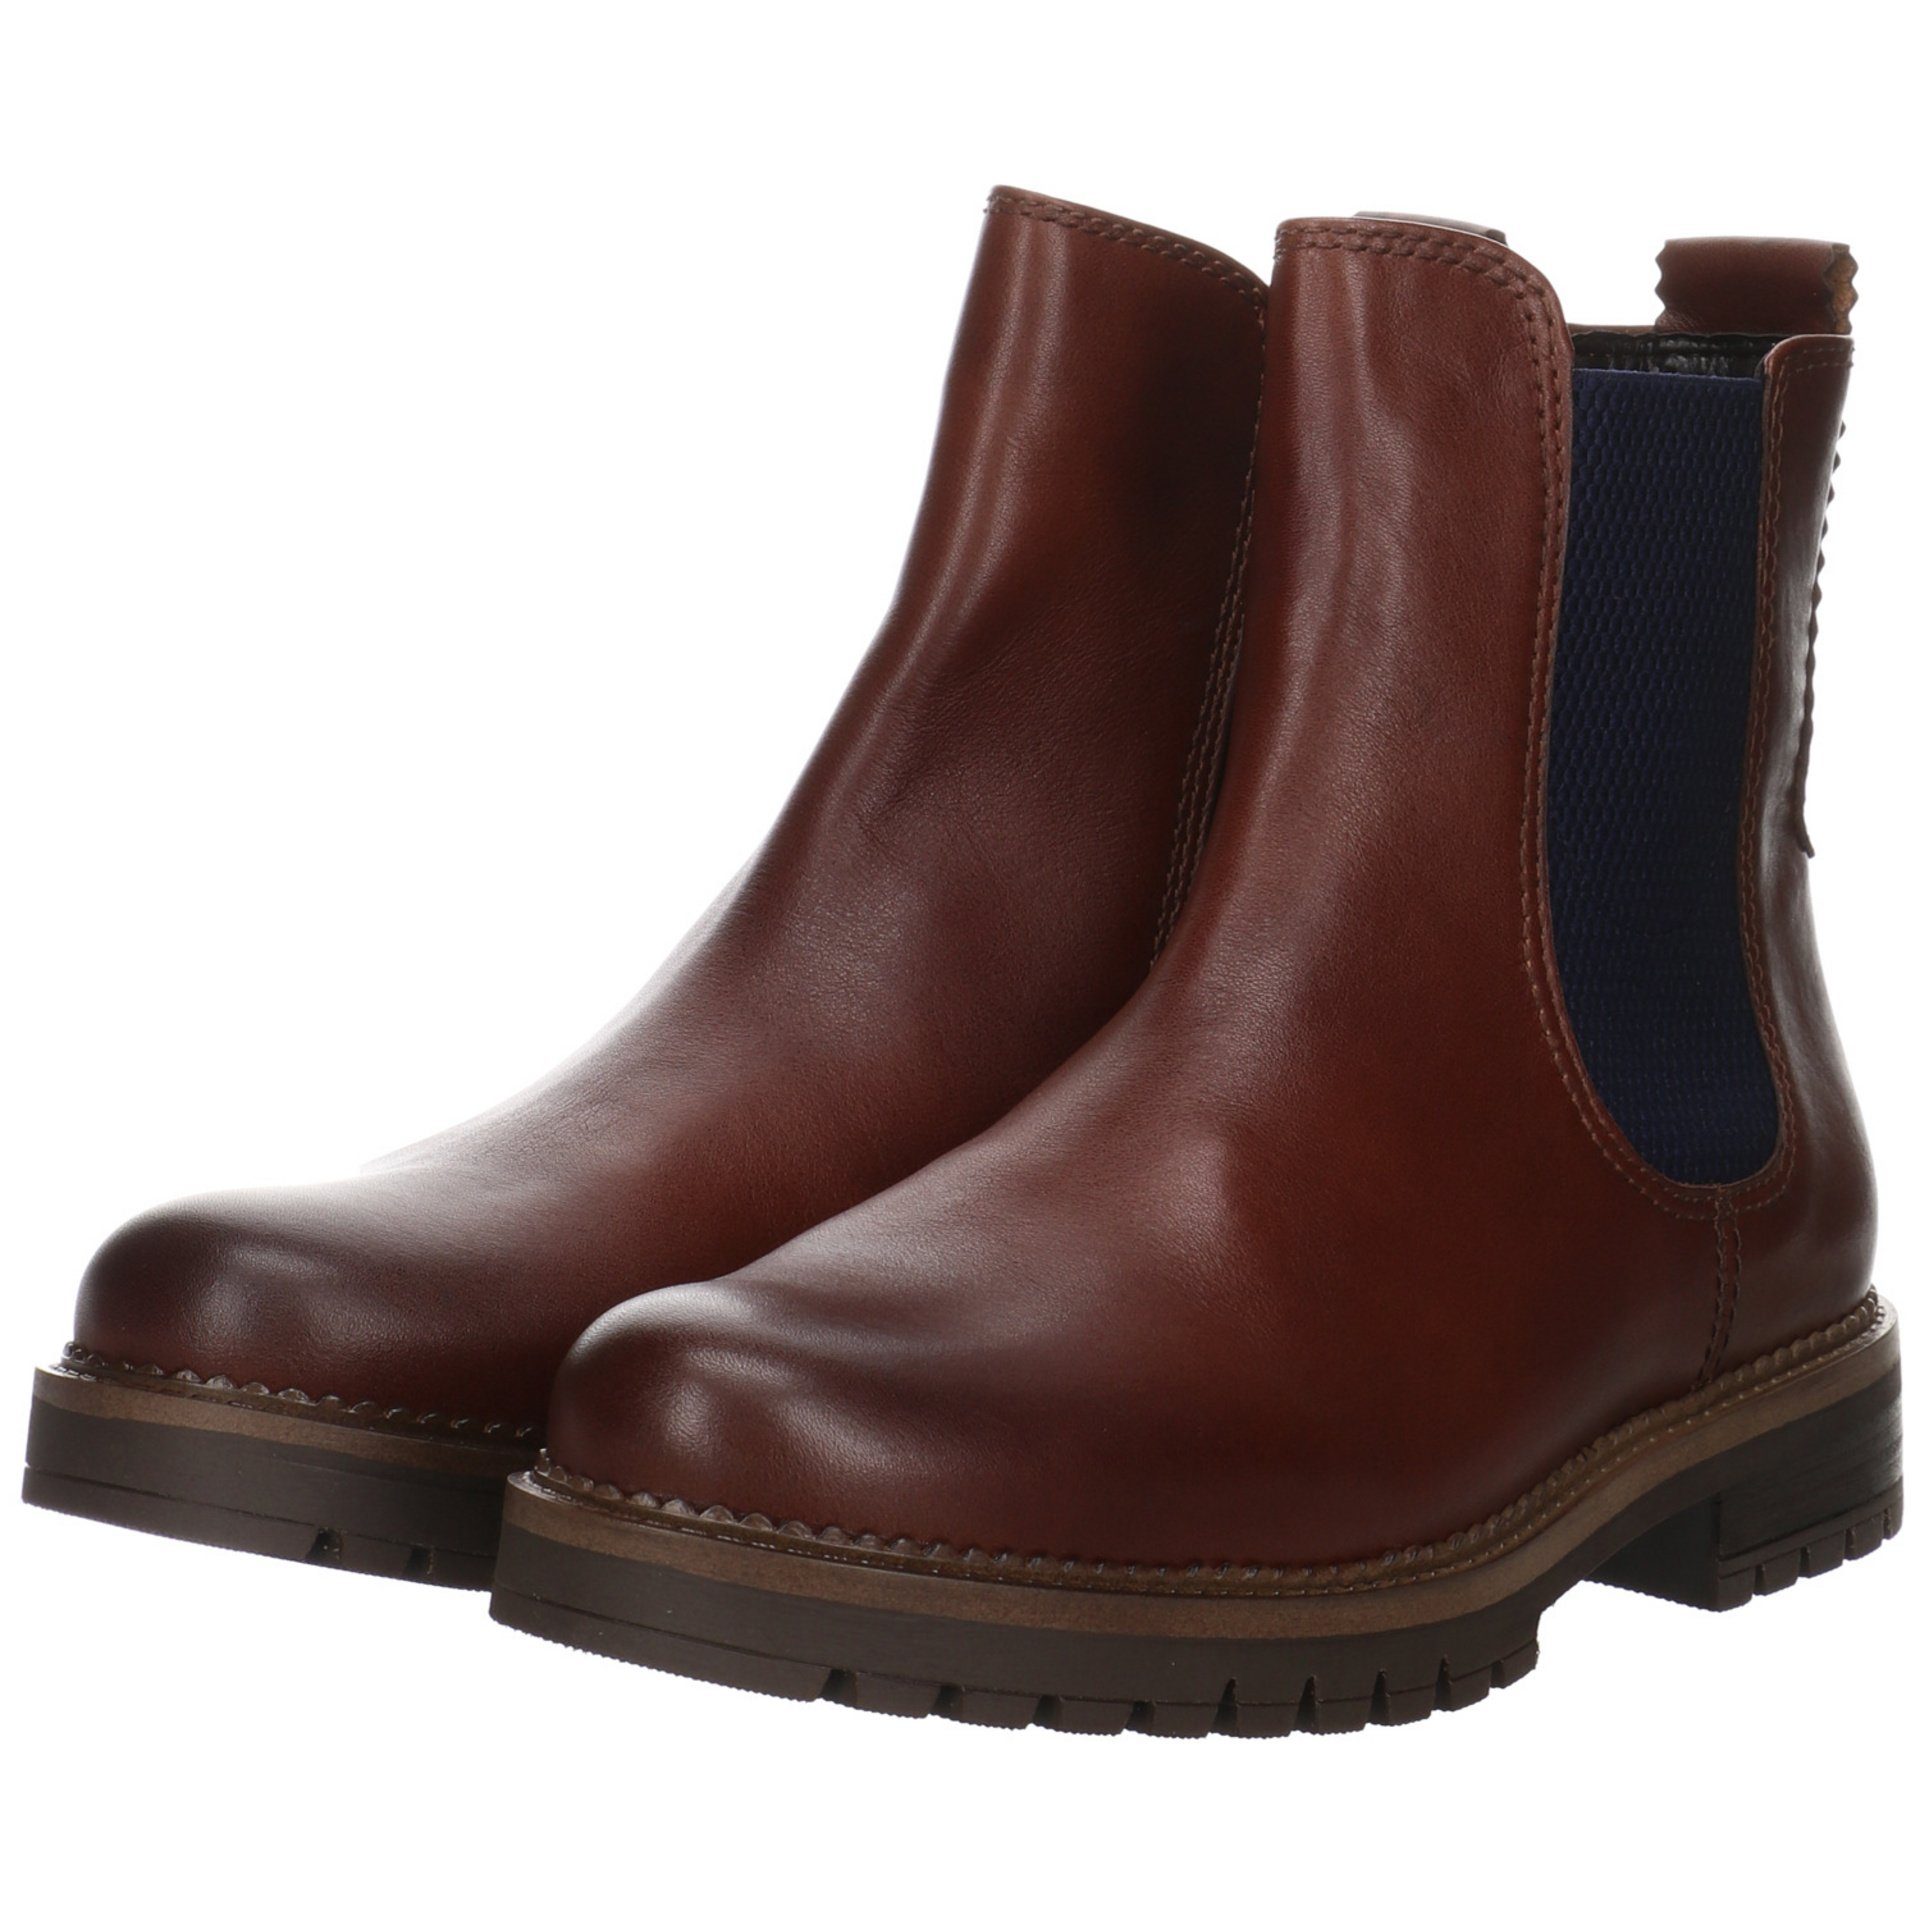 Stiefel Damen sattel Stiefel Boots Leder-/Textilkombination Gabor Schuhe (river) Chelsea